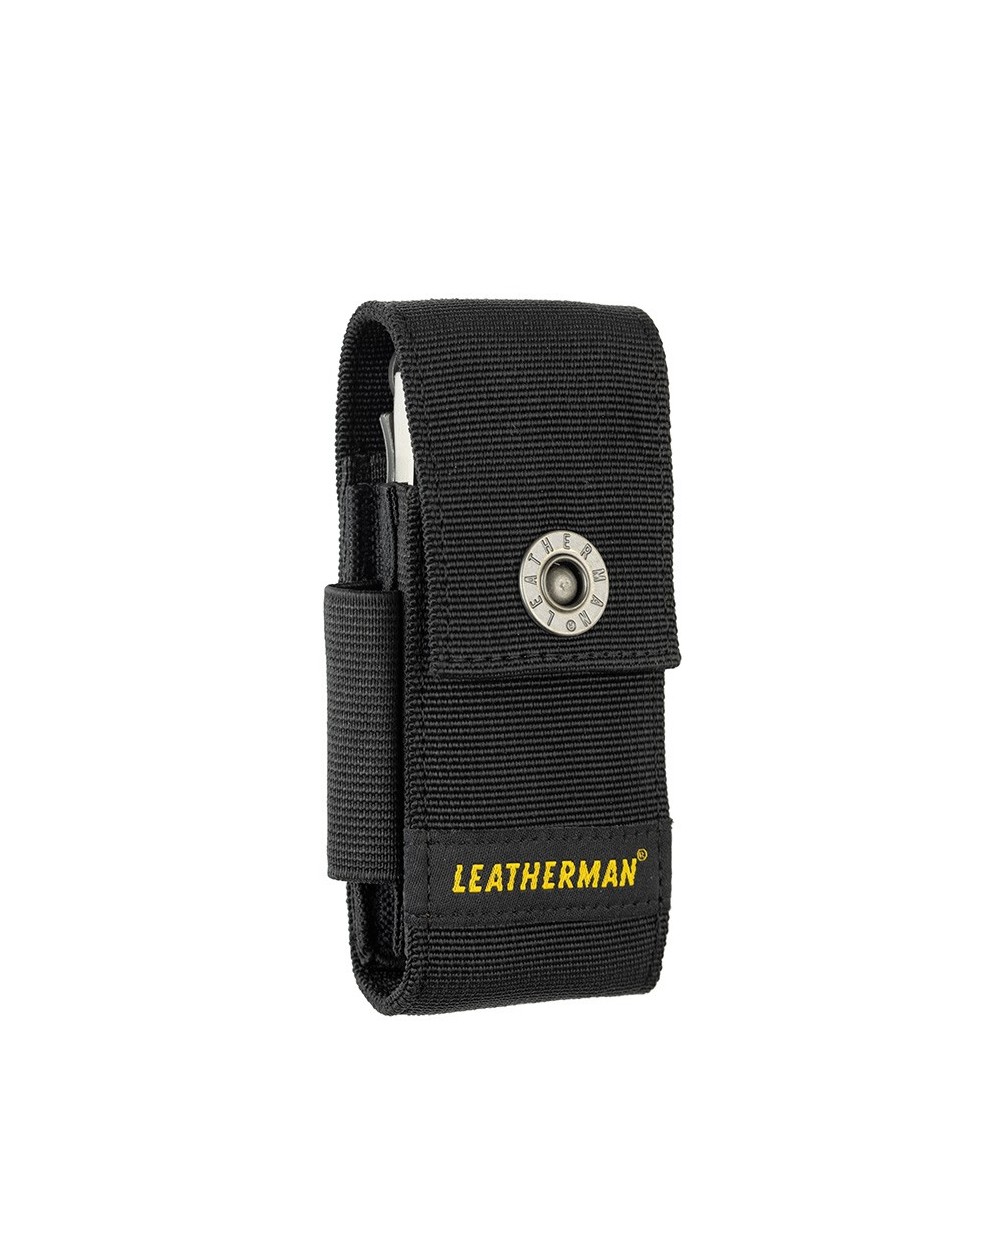 leatherman-etui-nylon-noir-poche-bit-kit-signal-934933